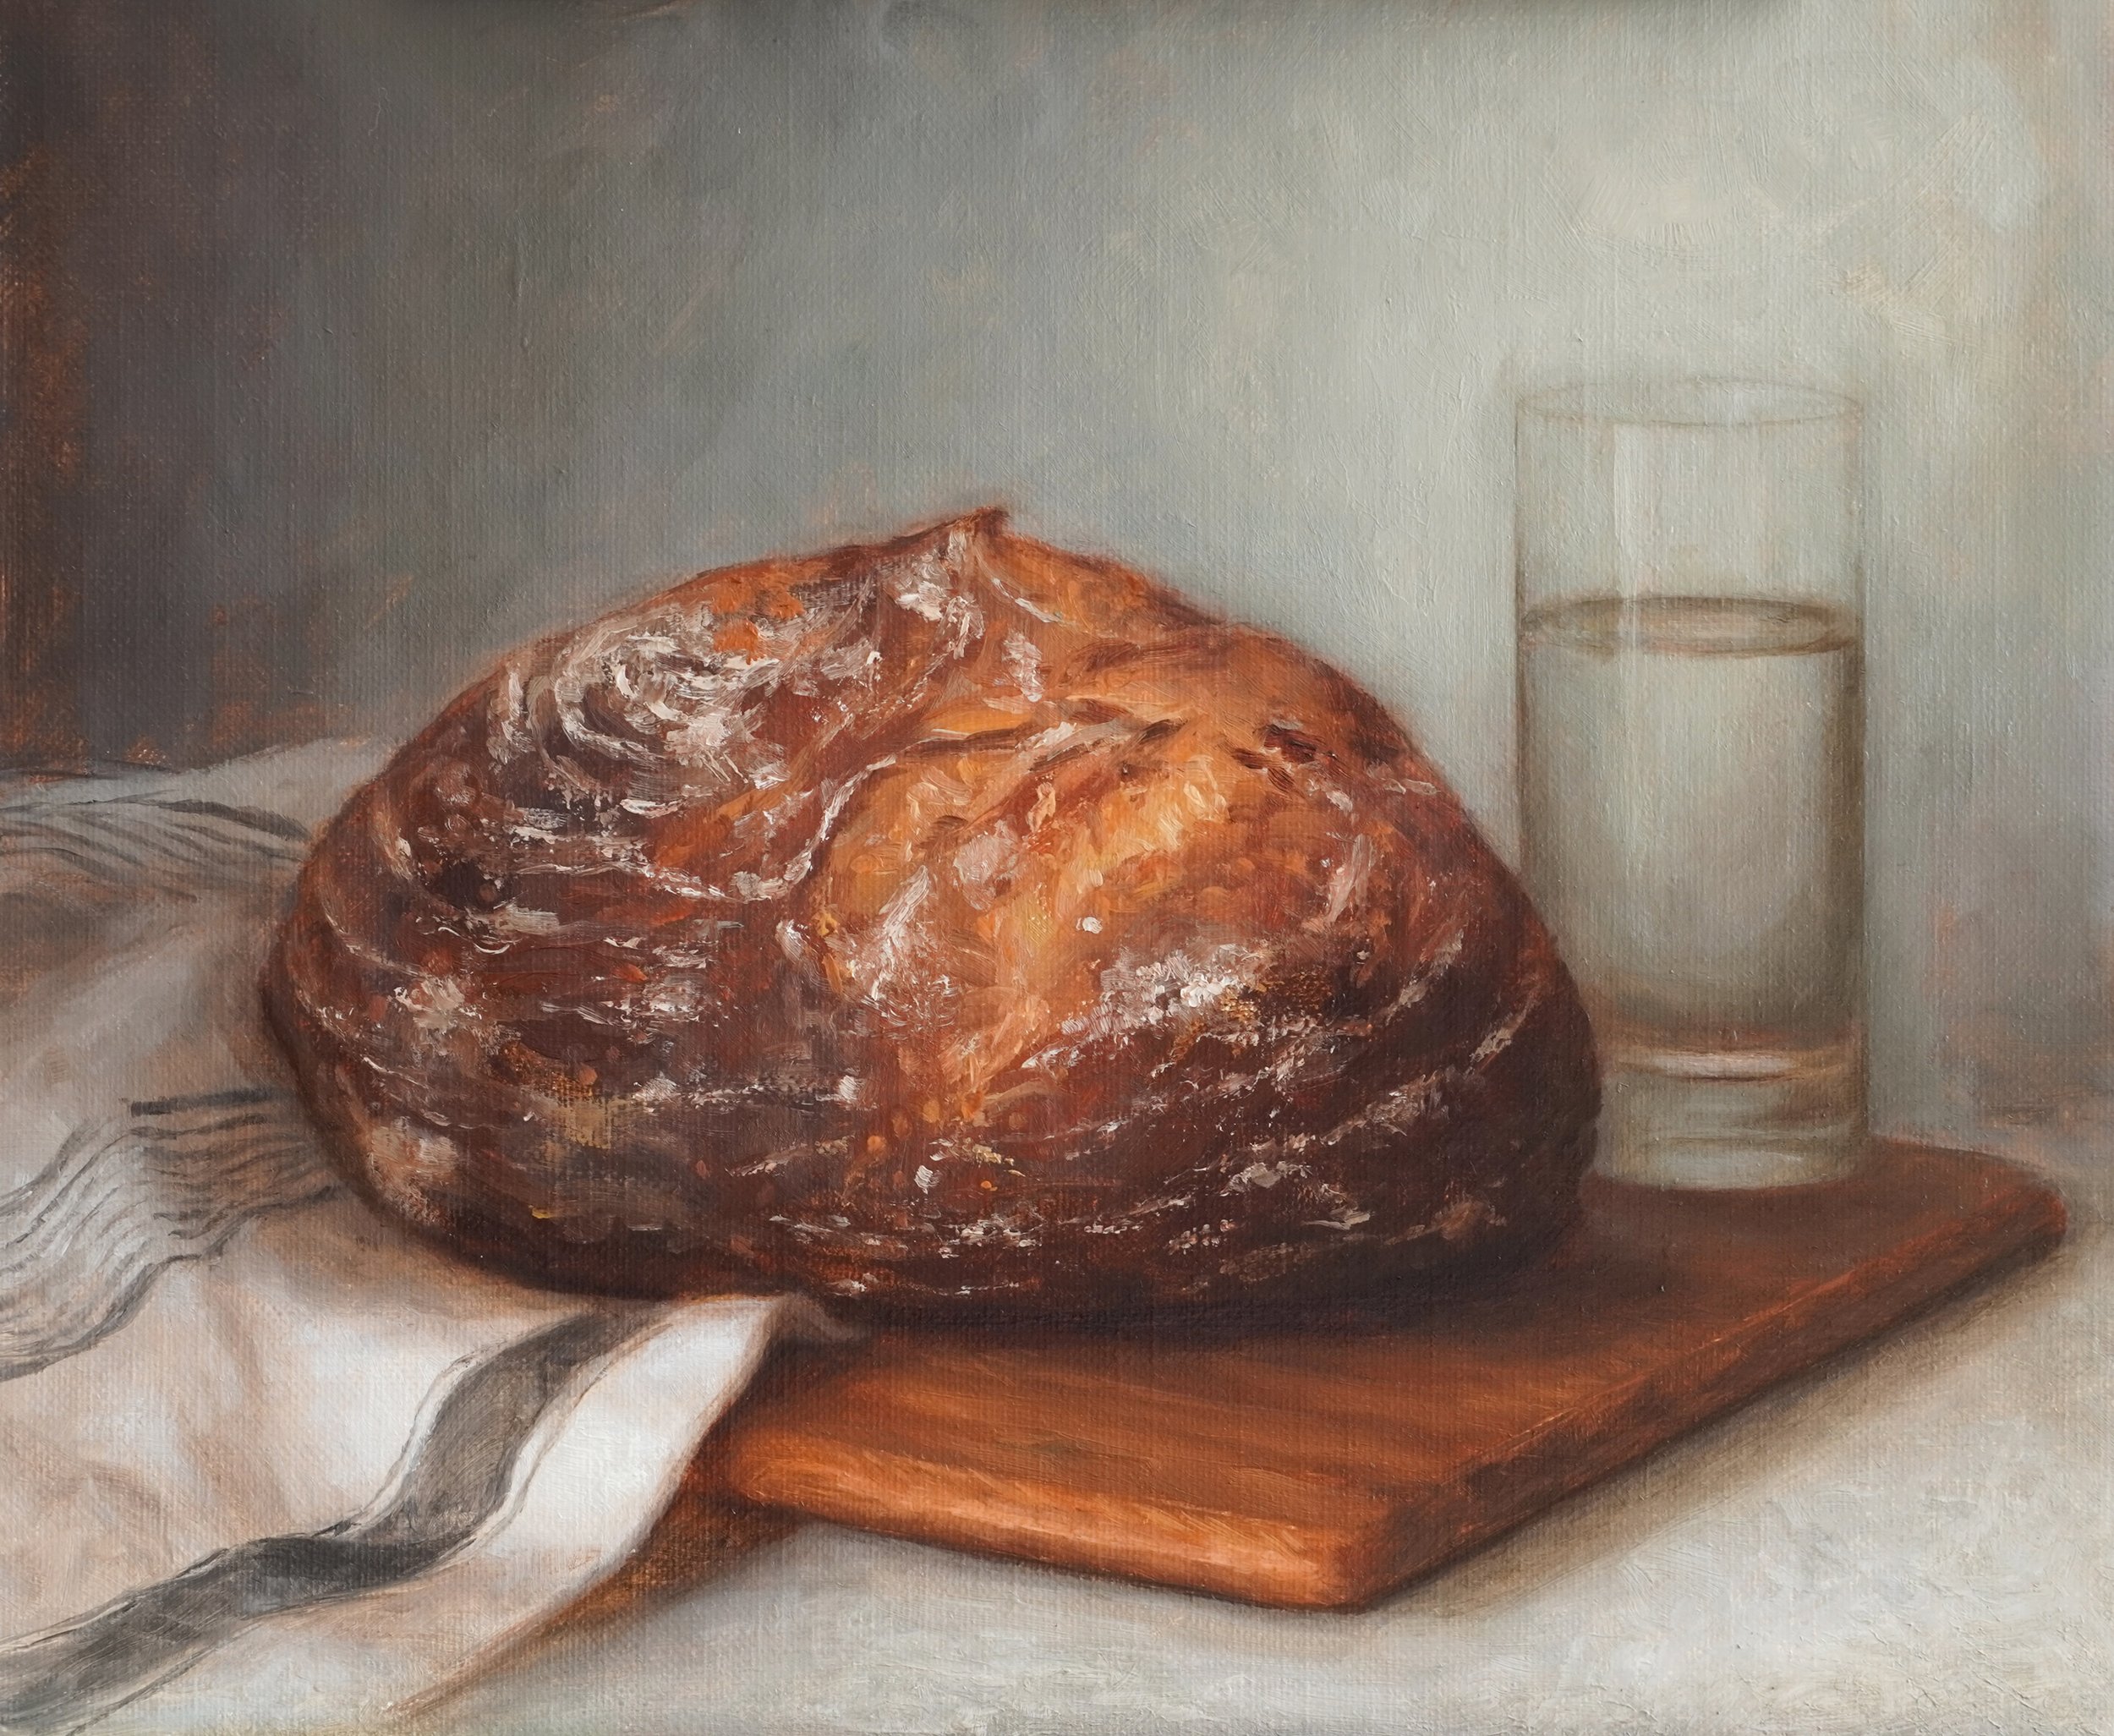 Daily Bread by Julia Tsang Kavanagh